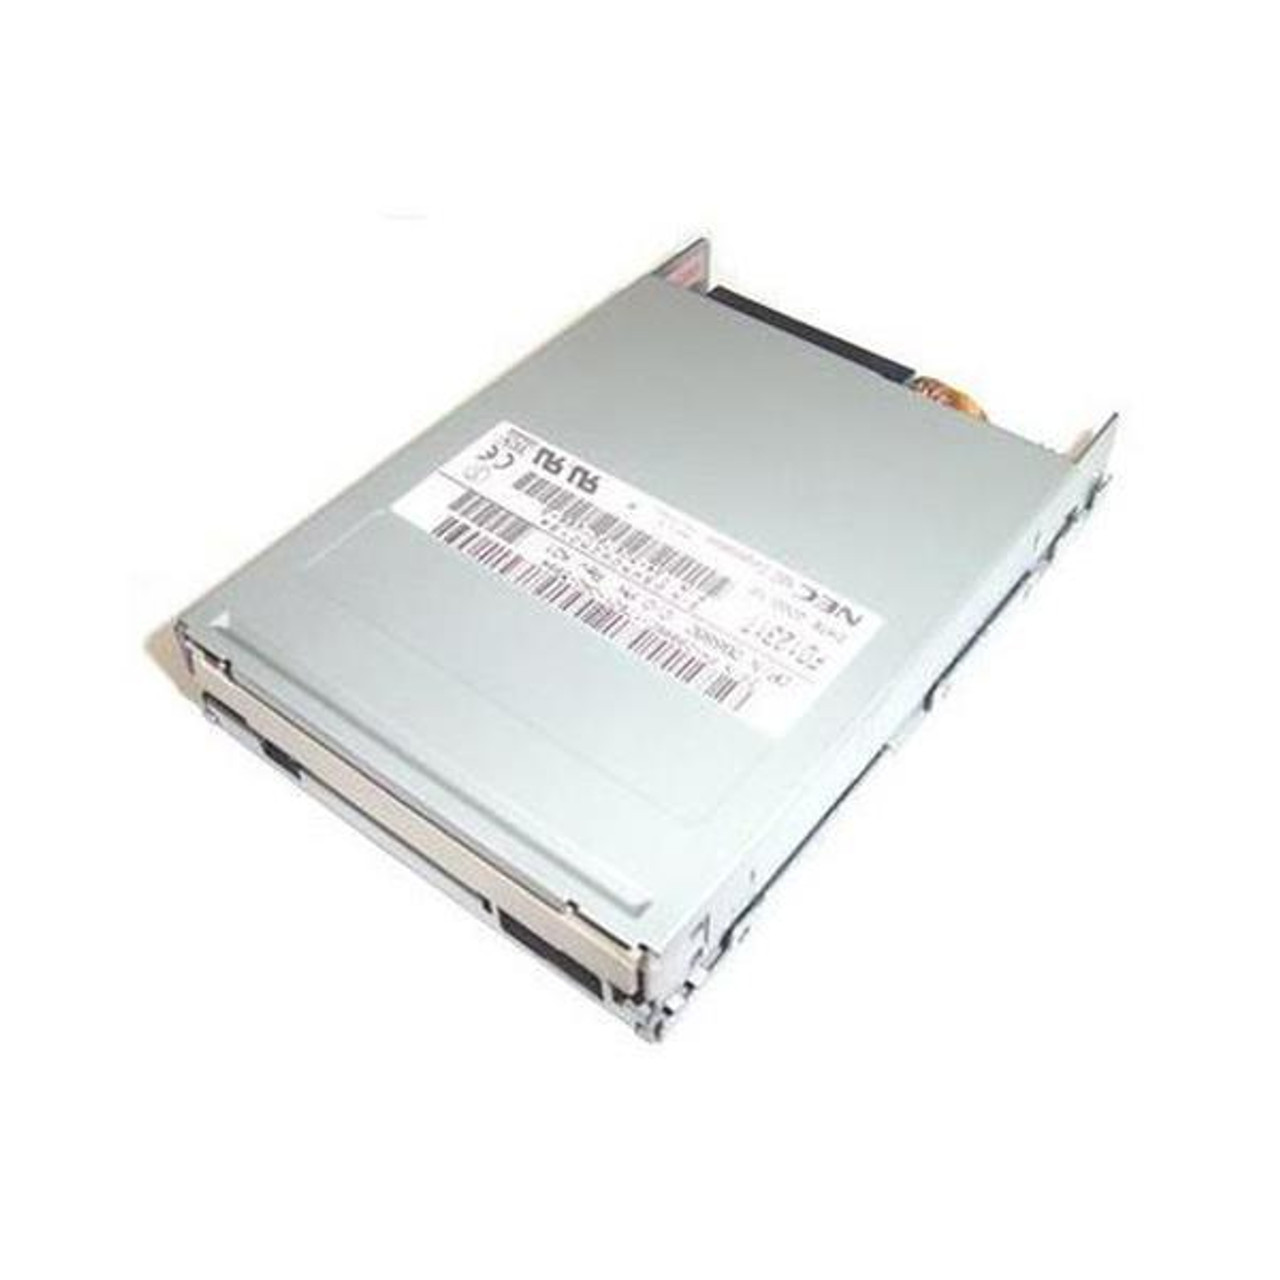 5065-4250-OEM - HP 1.44MB Floppy Drive no Bezel Black Shutter